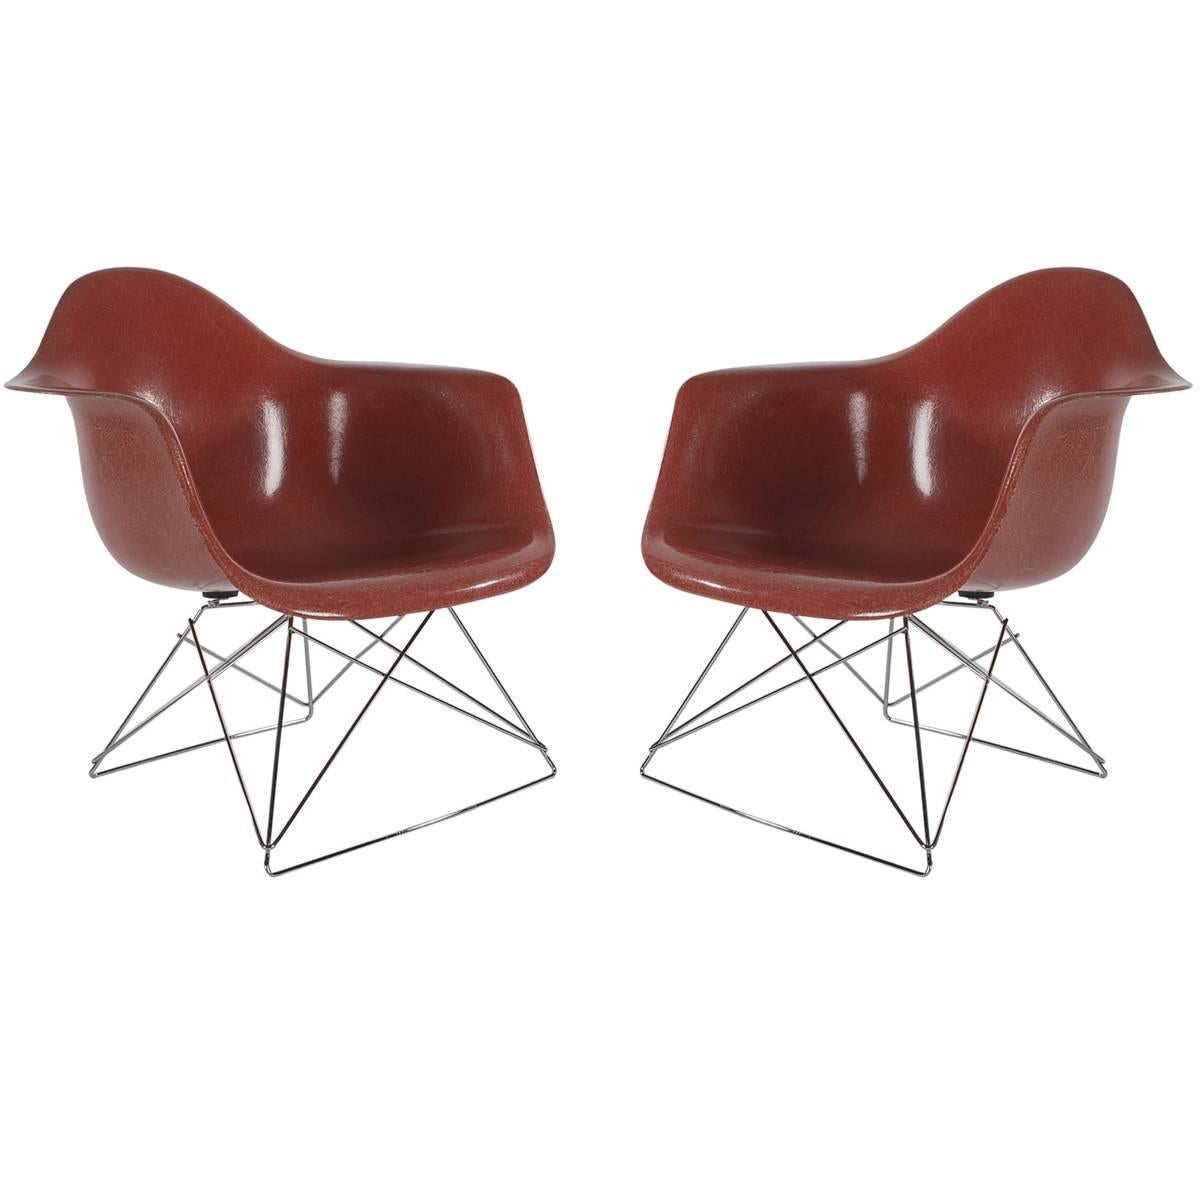 Pair of Mid-Century Eames Herman Miller Fiberglass Lounge Chairs in Terracotta